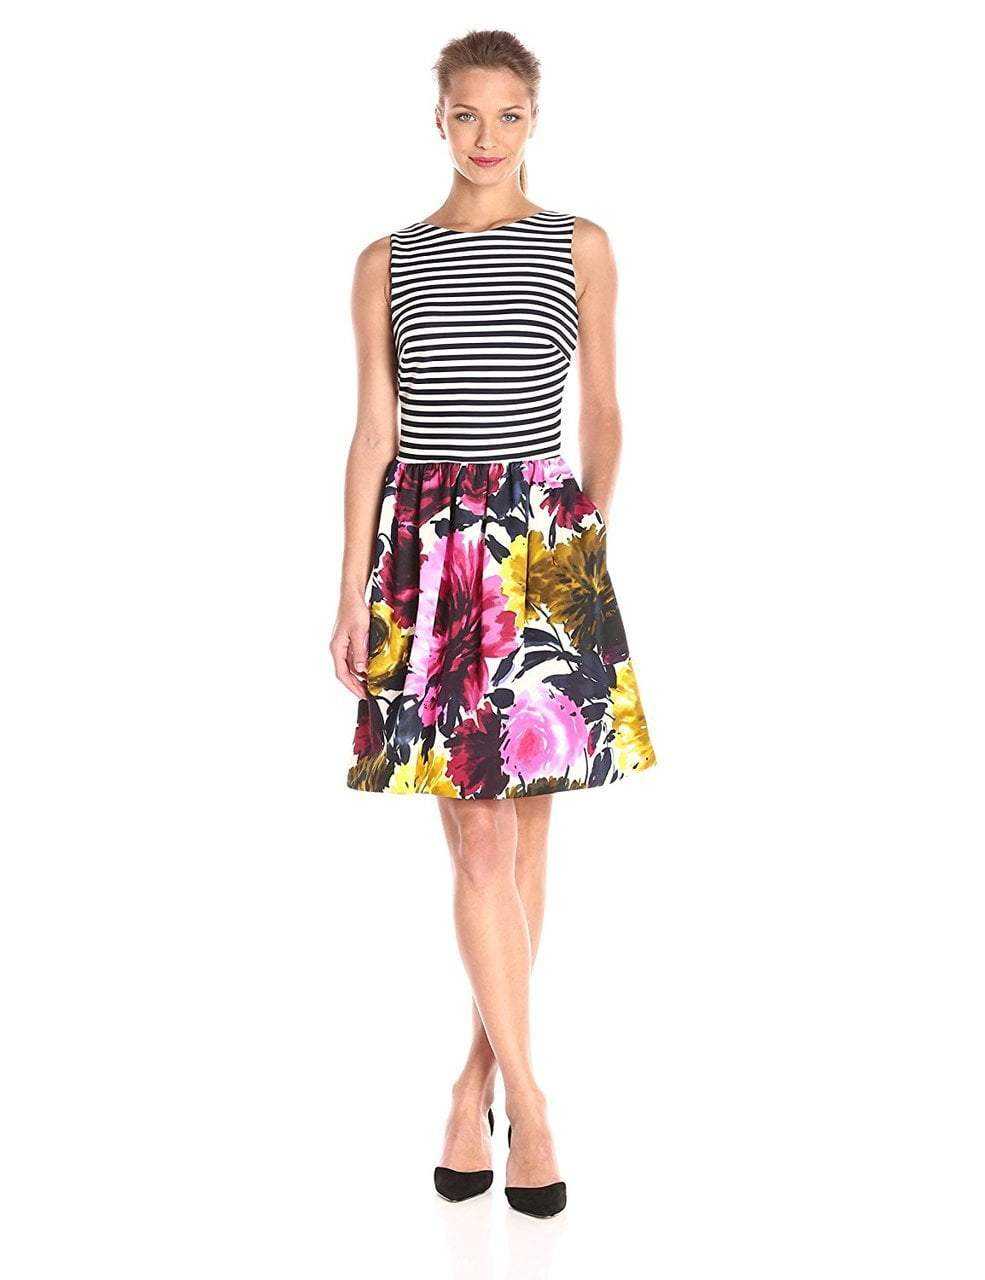 Taylor, Taylor - Stripe and Floral Print  A-line Dress 5997M